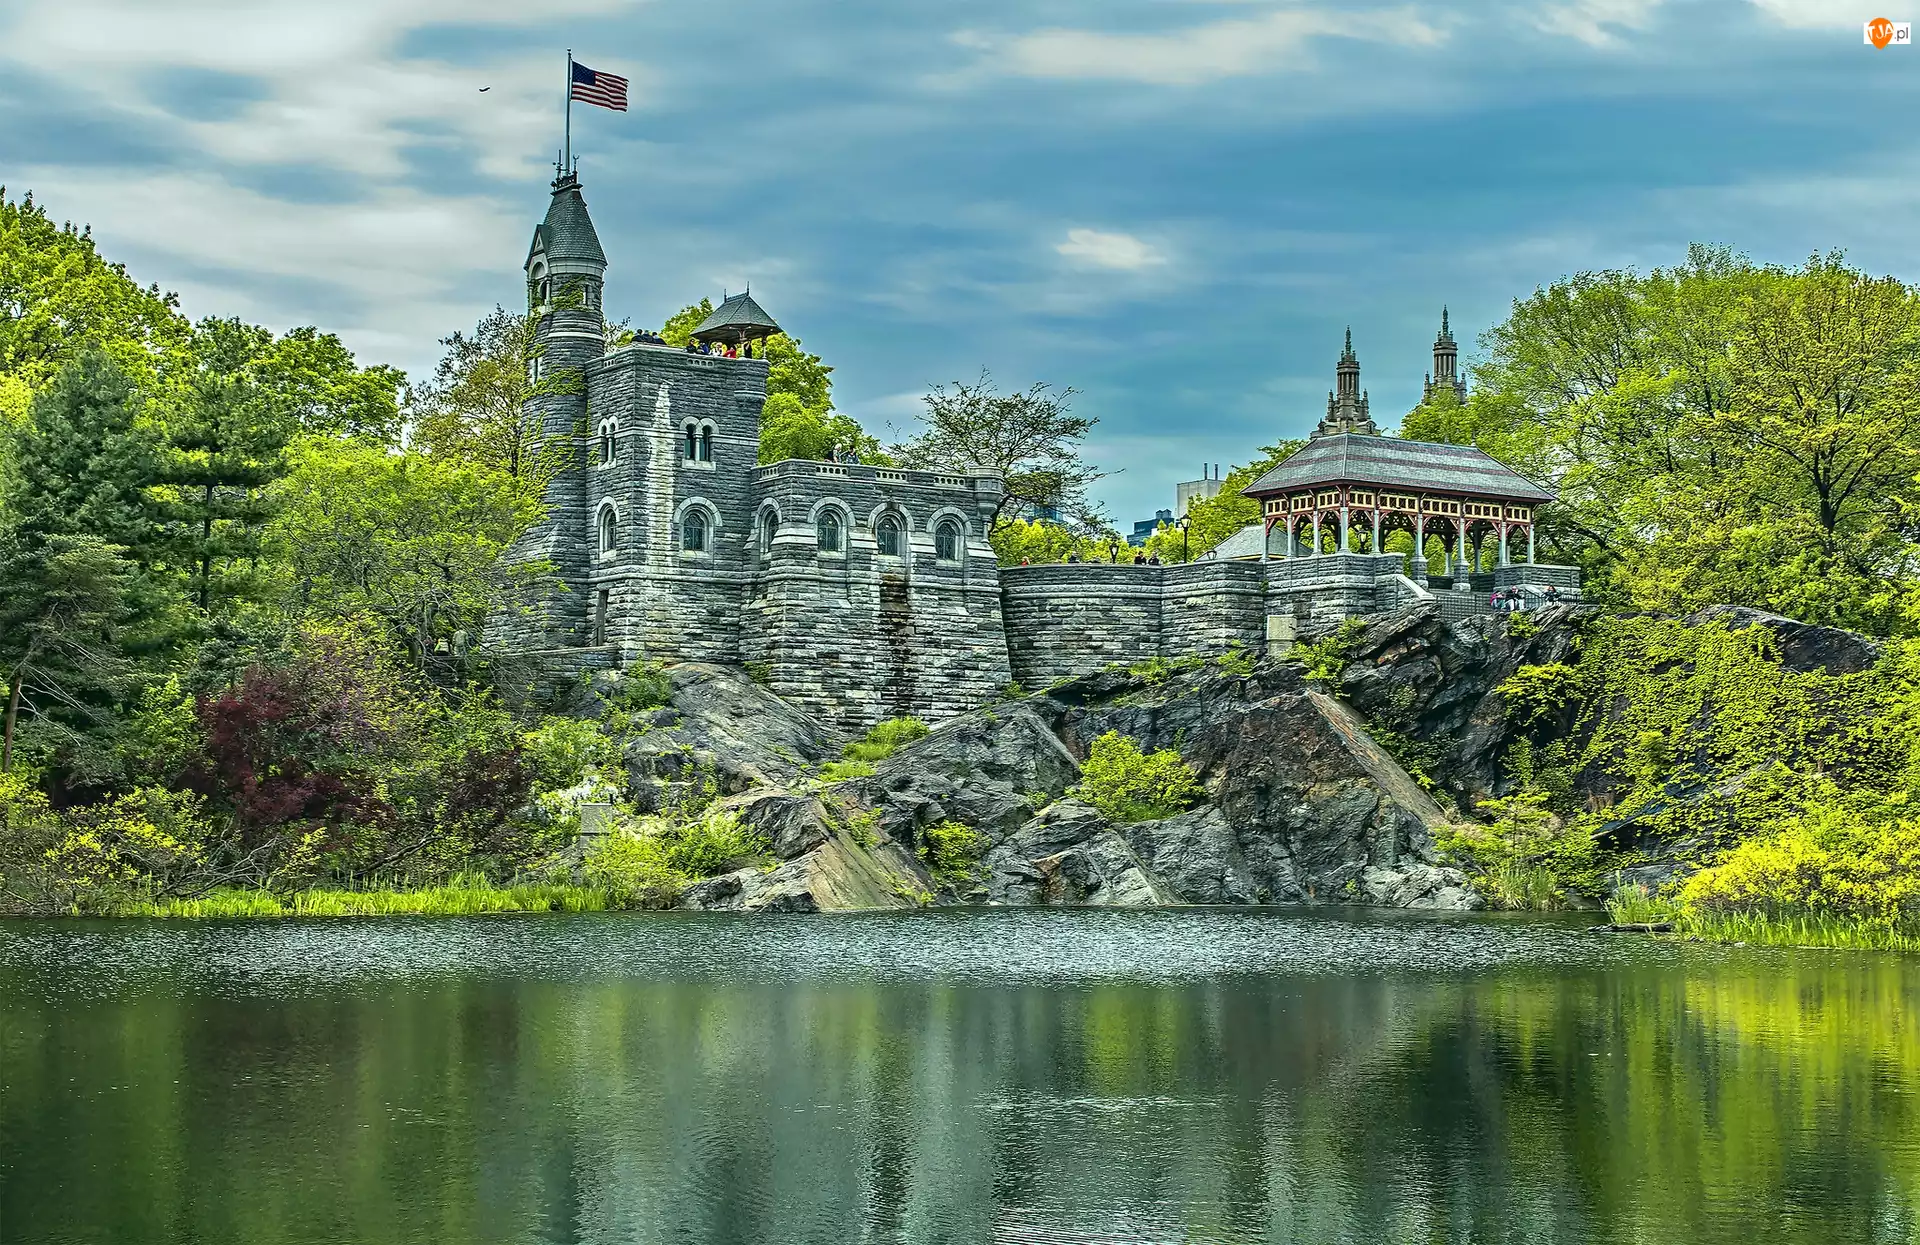 Stany Zjednoczone, Zamek Belvedere, Central Park, Nowy Jork